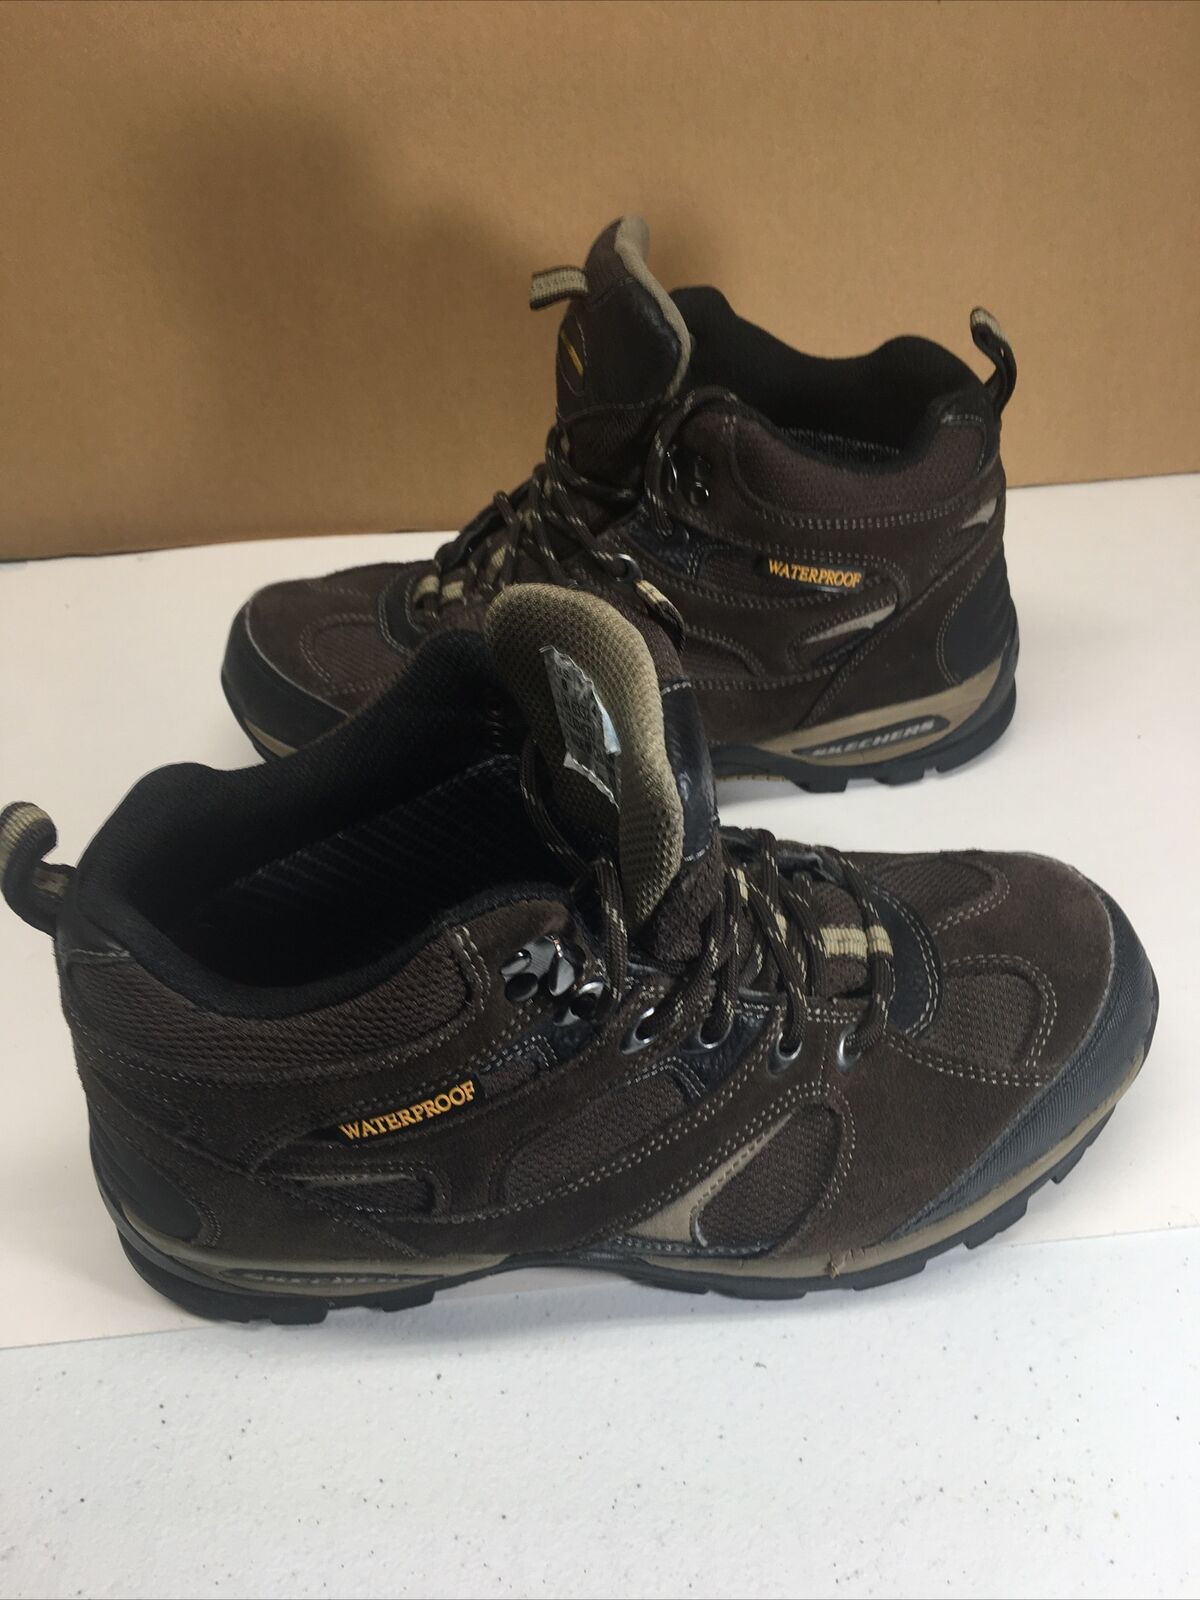 SKECHERS Hiking Work Waterproof Brown Lace Up Boots (63326) Mens Sz US 8 / UK 7